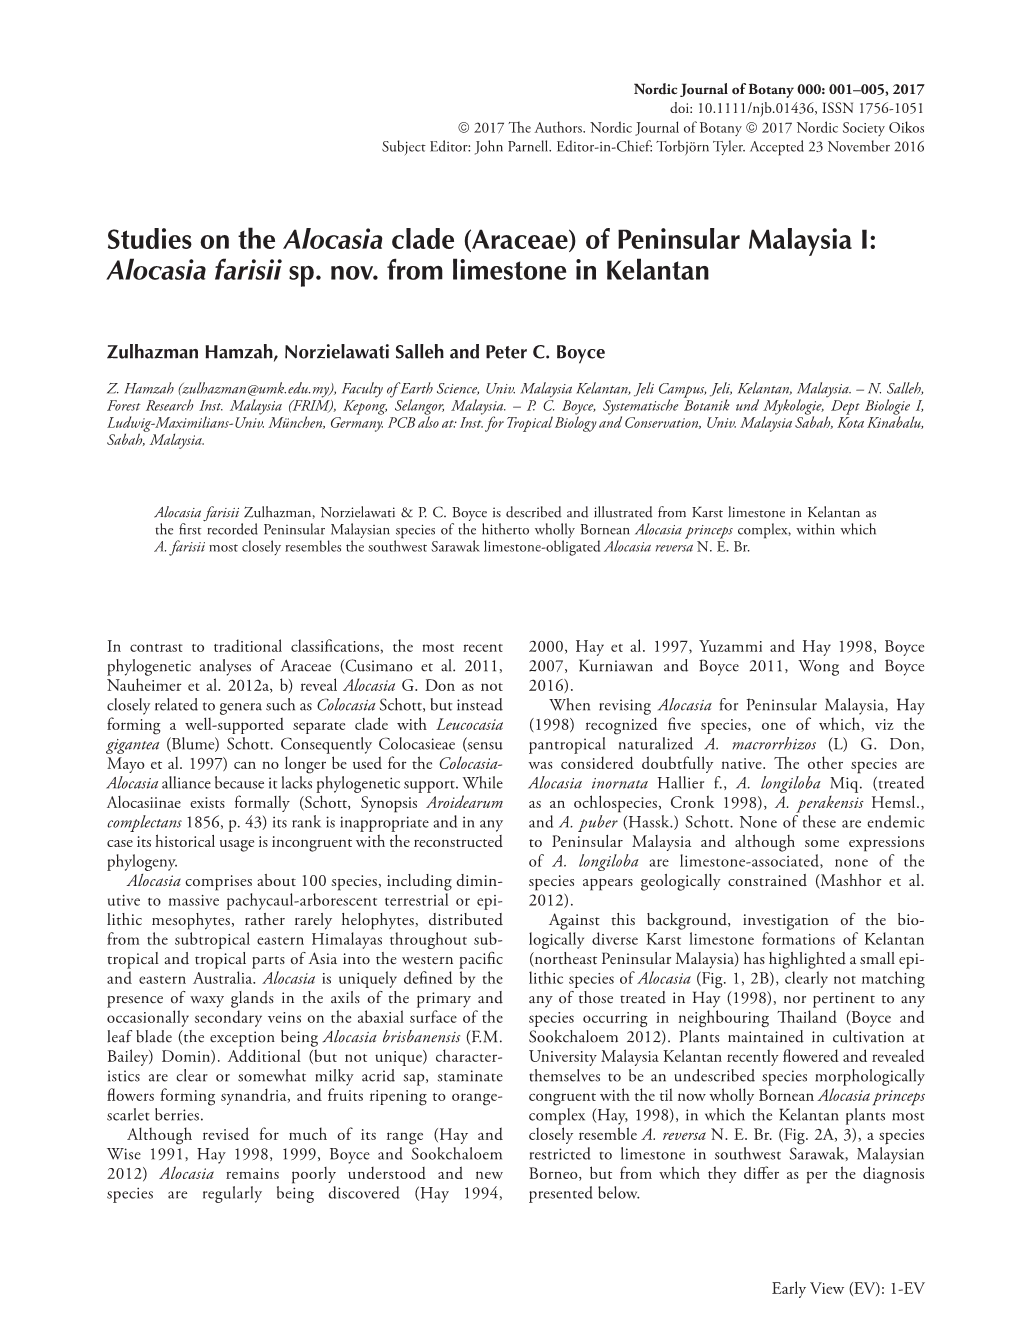 Studies on the Alocasia Clade (Araceae) of Peninsular Malaysia I: Alocasia Farisii Sp